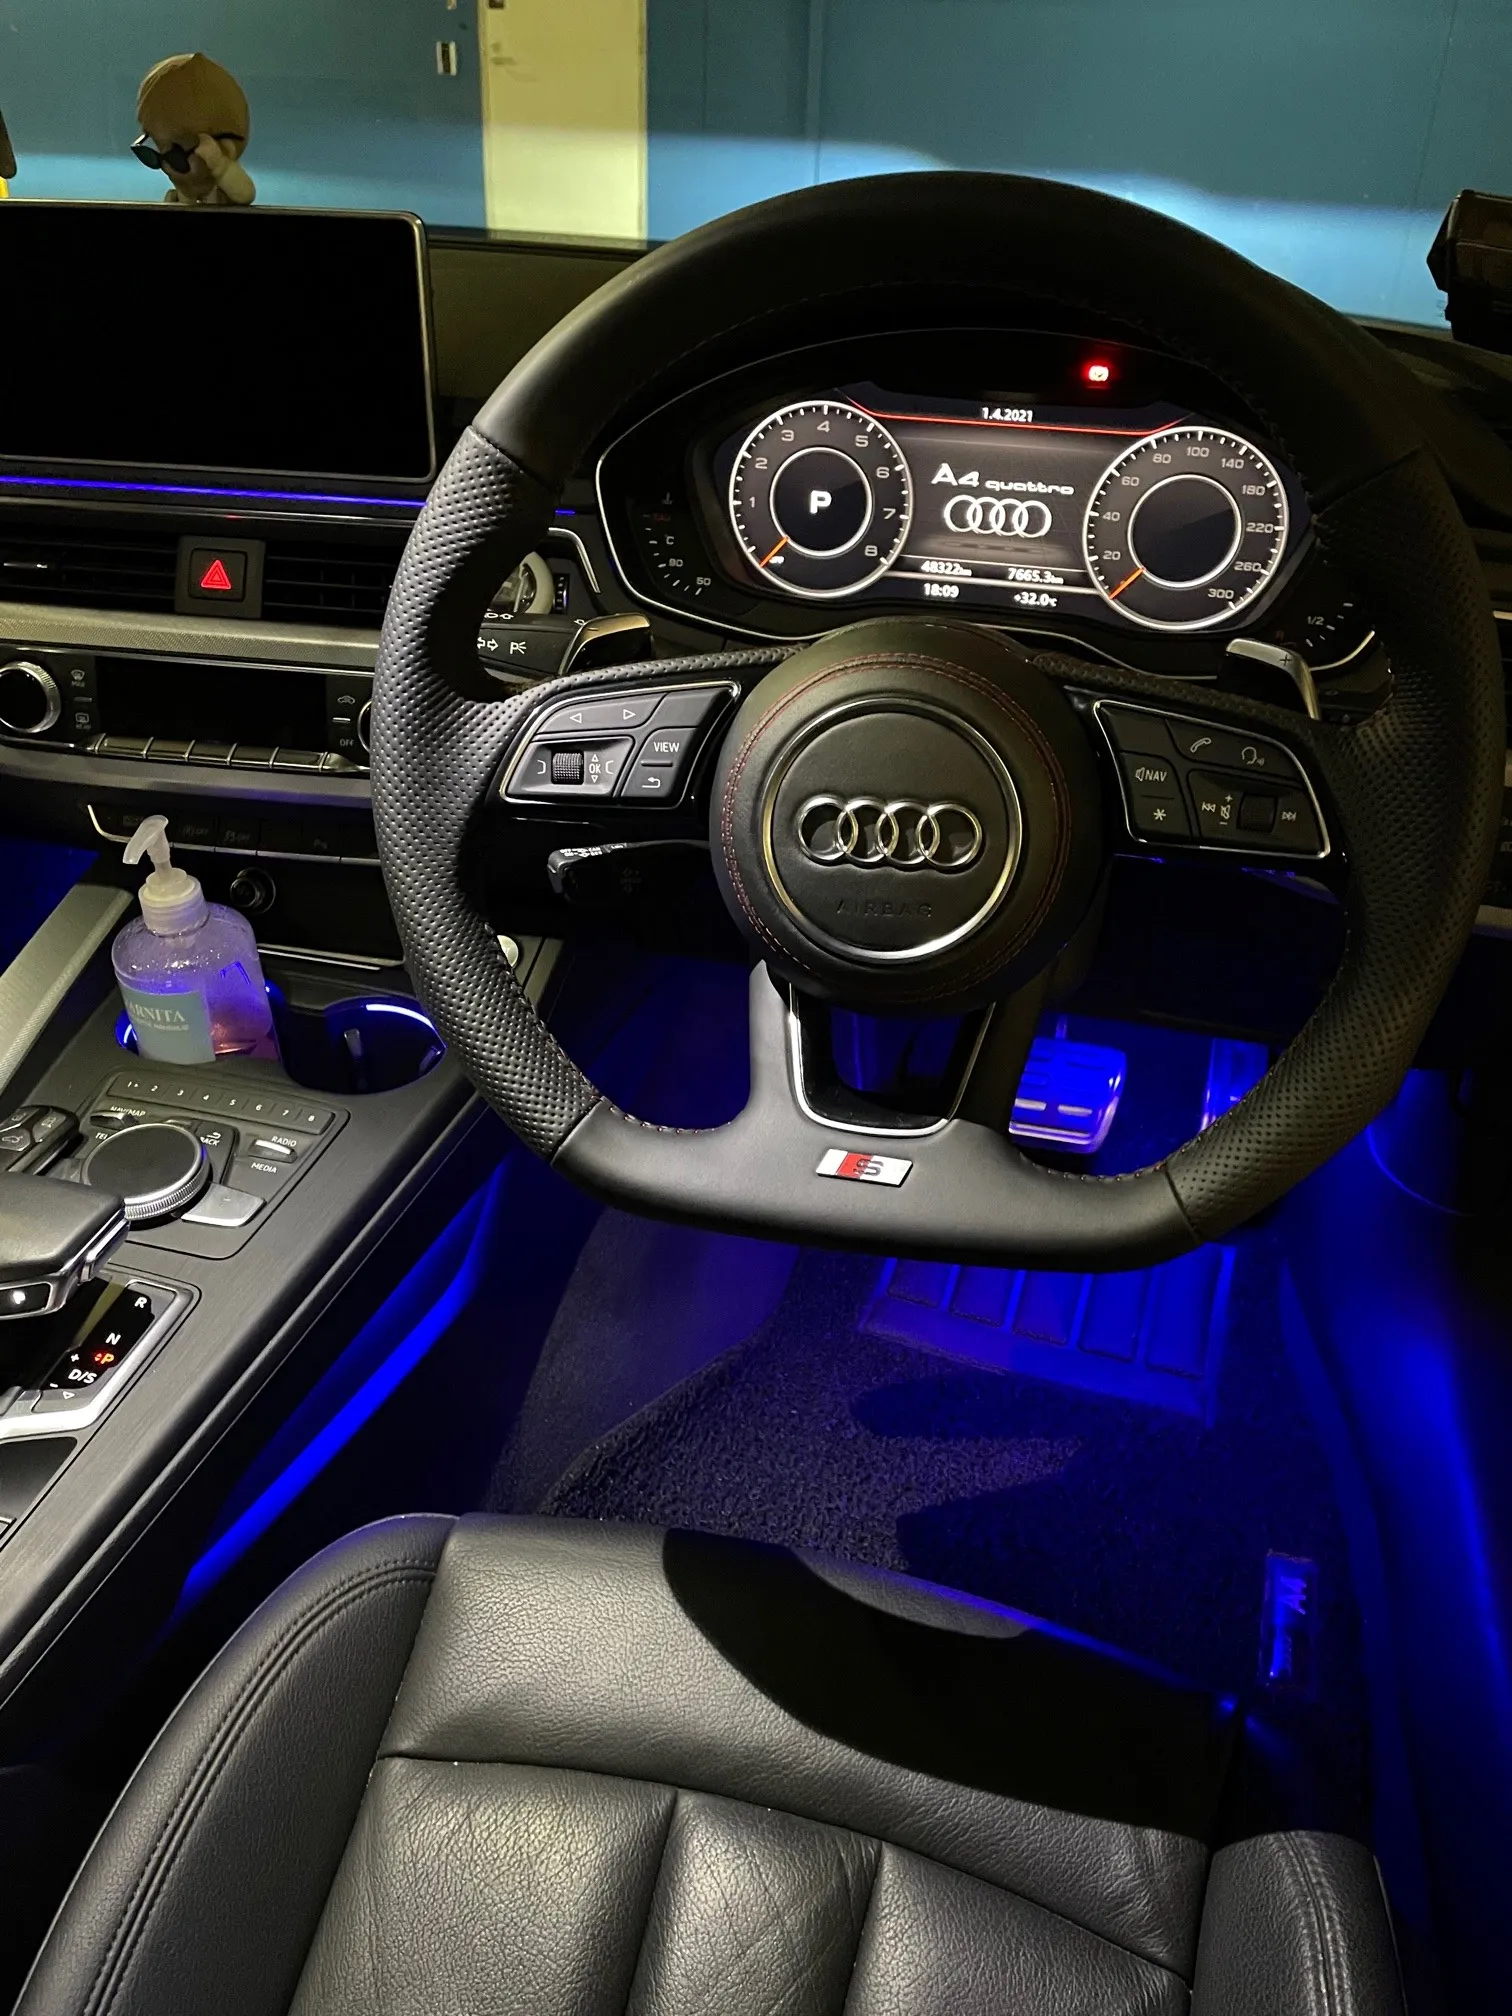 Modhub Steering Wheels - Audi A4 B9.5